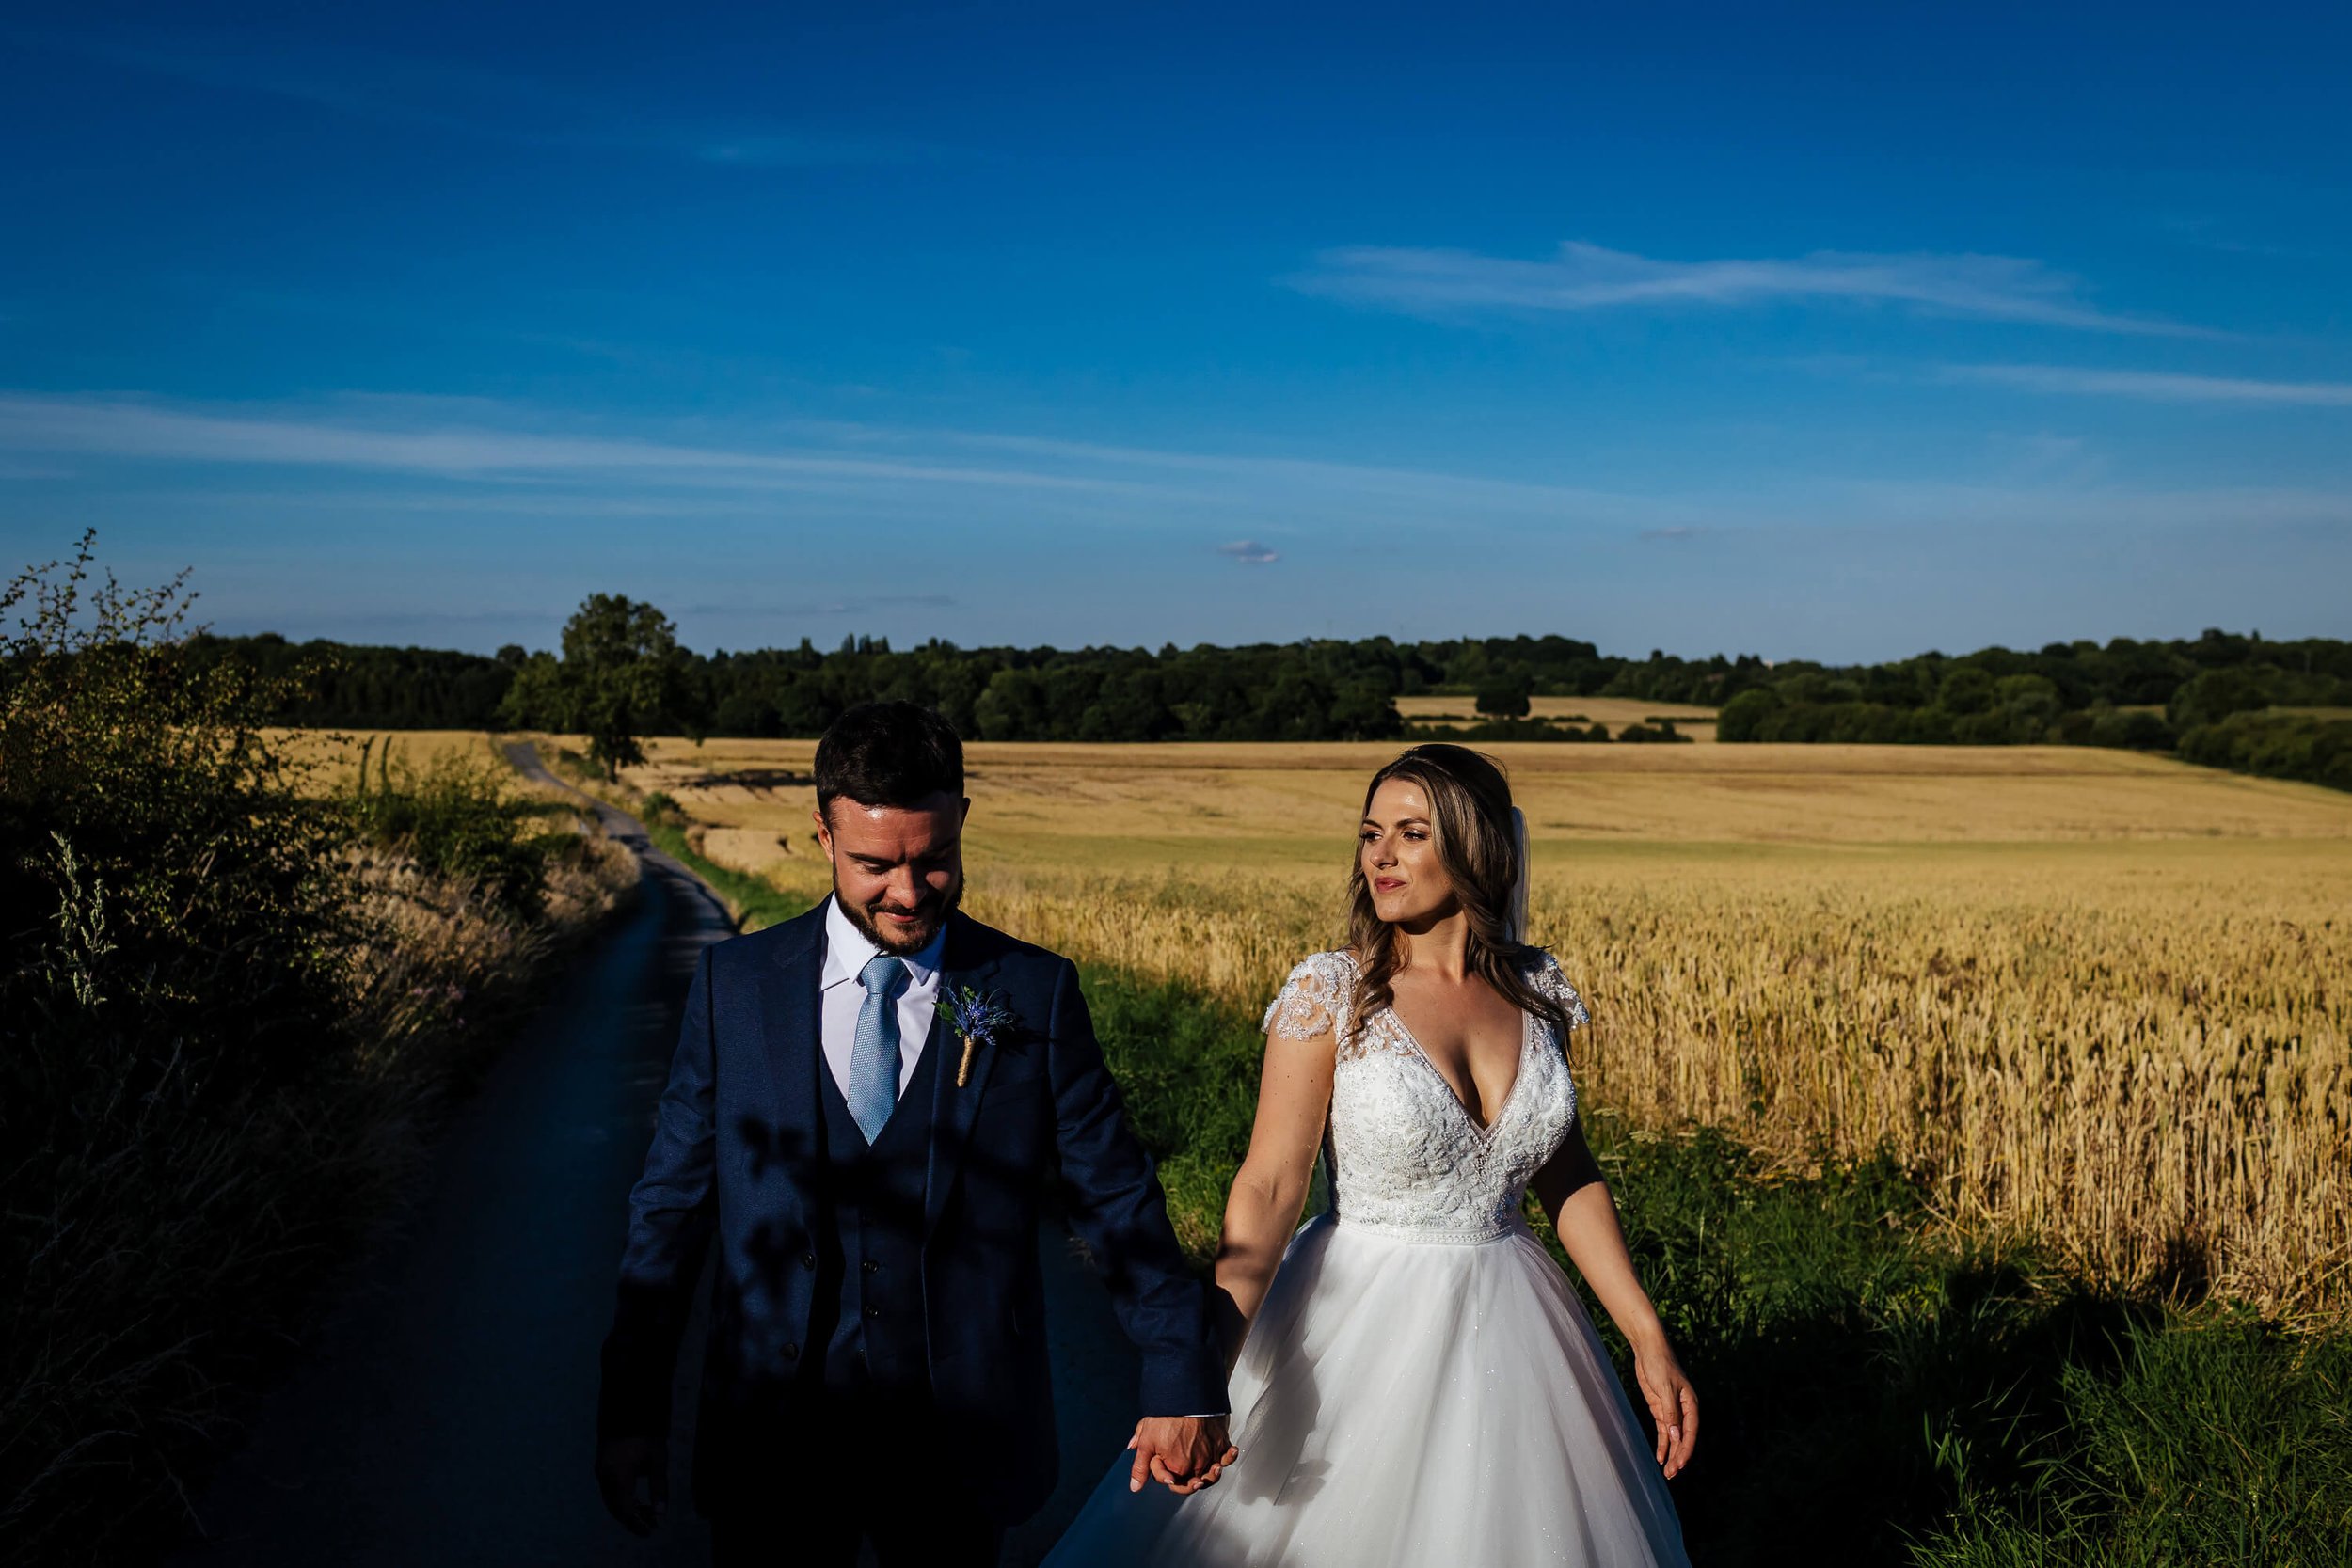 Swancar Farm wedding photographer portrait